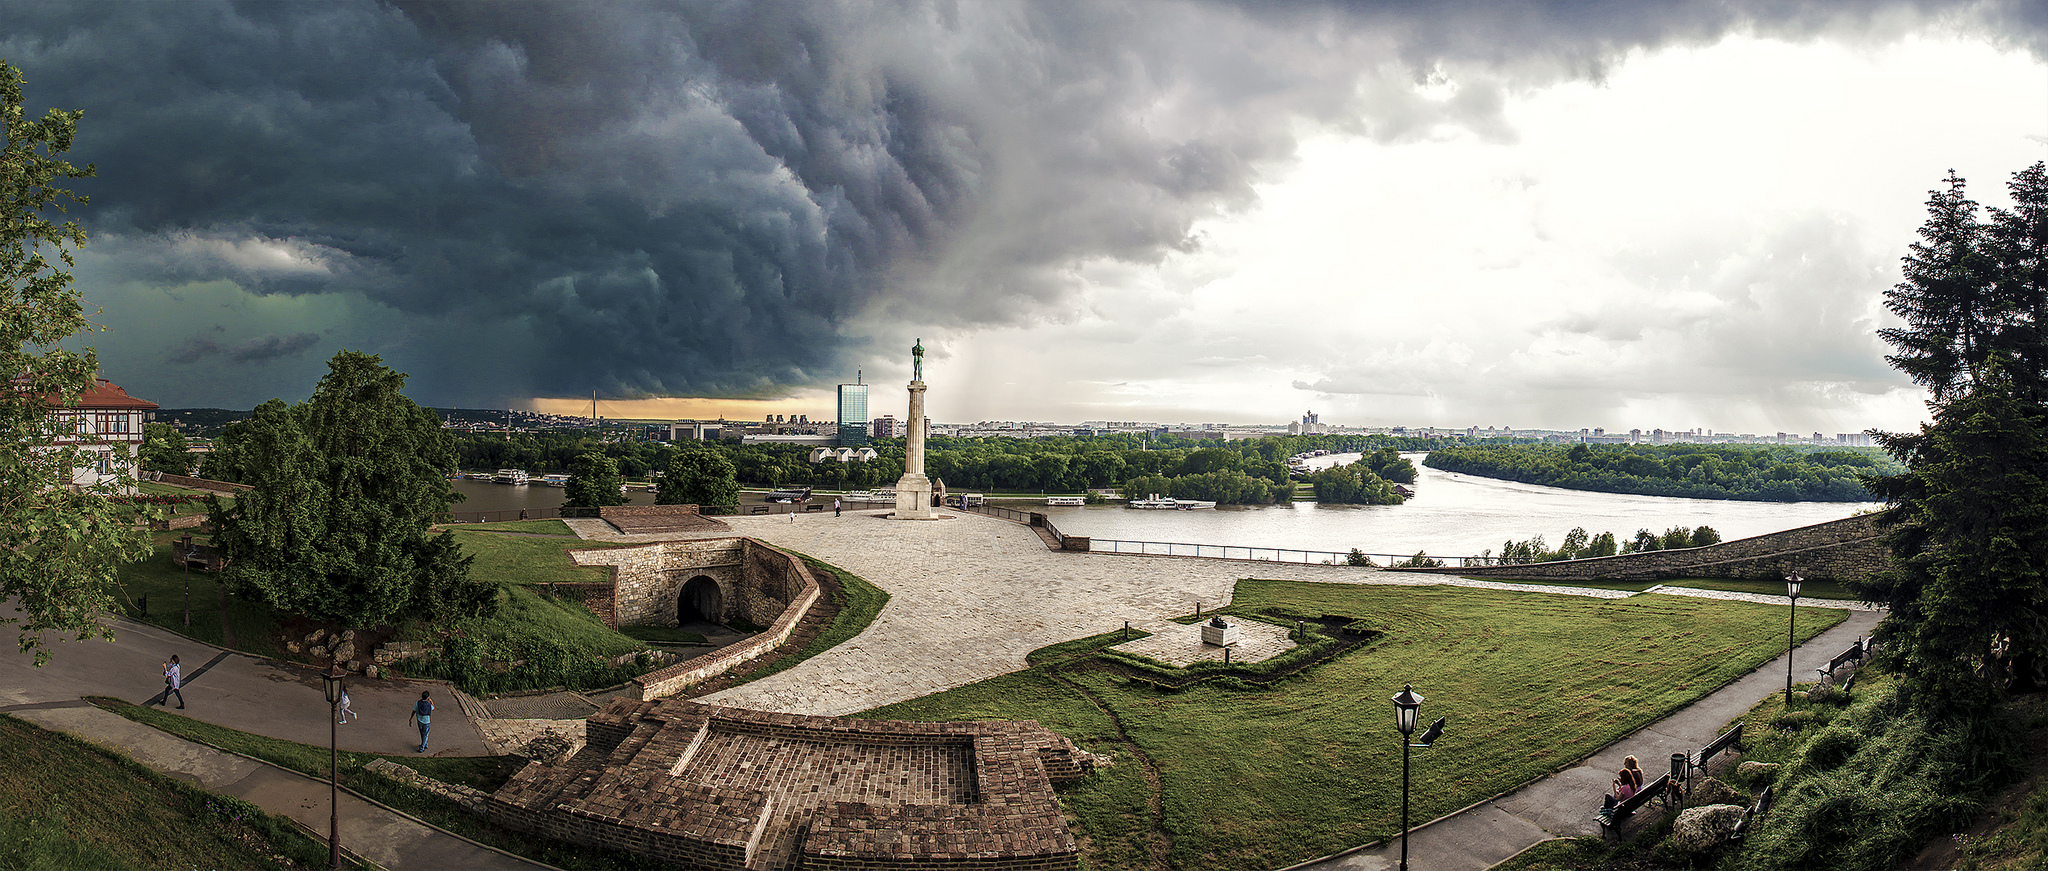 Kalemegdan_fortress_in_Belgrade_-_Chasing_the_Storm.jpg